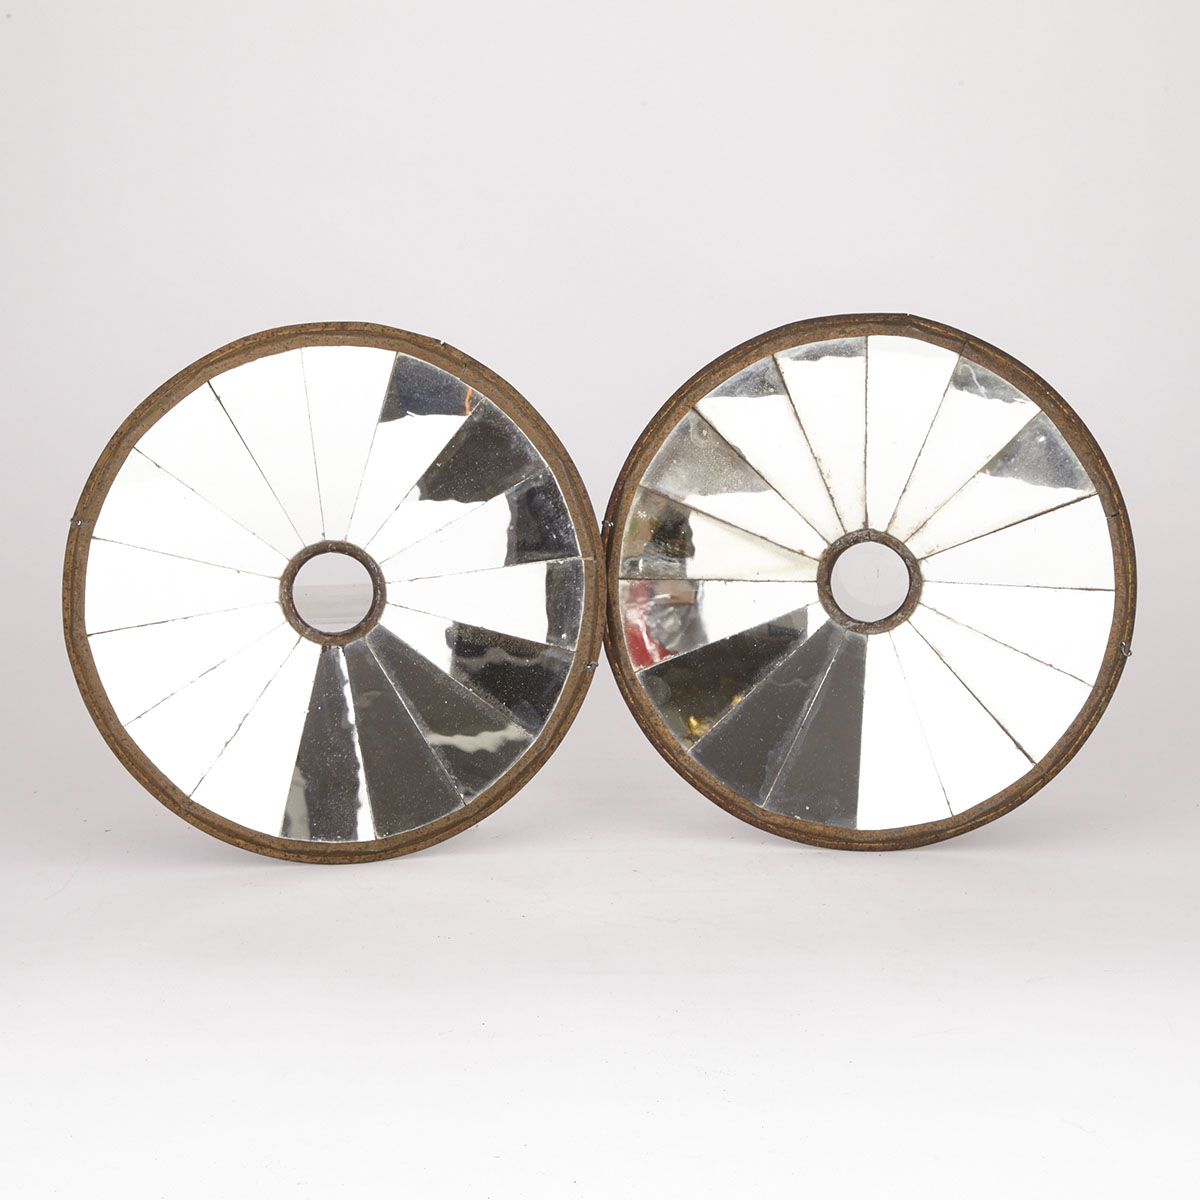 Pair of  Mirrored Lamp Reflectors, 19th century